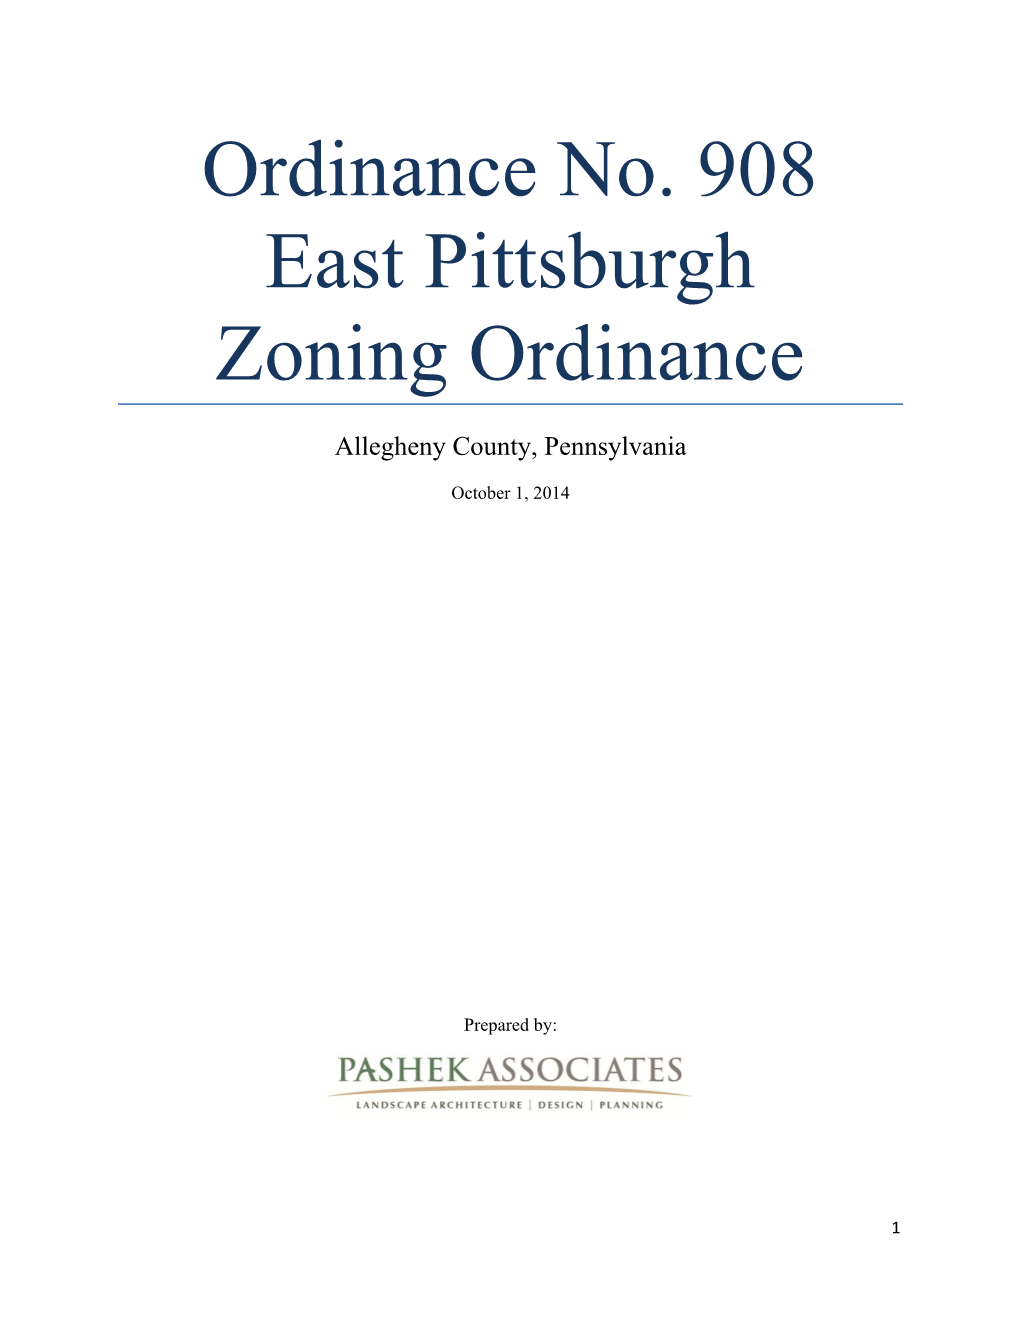 Ordinance No. 908 East Pittsburgh Zoning Ordinance